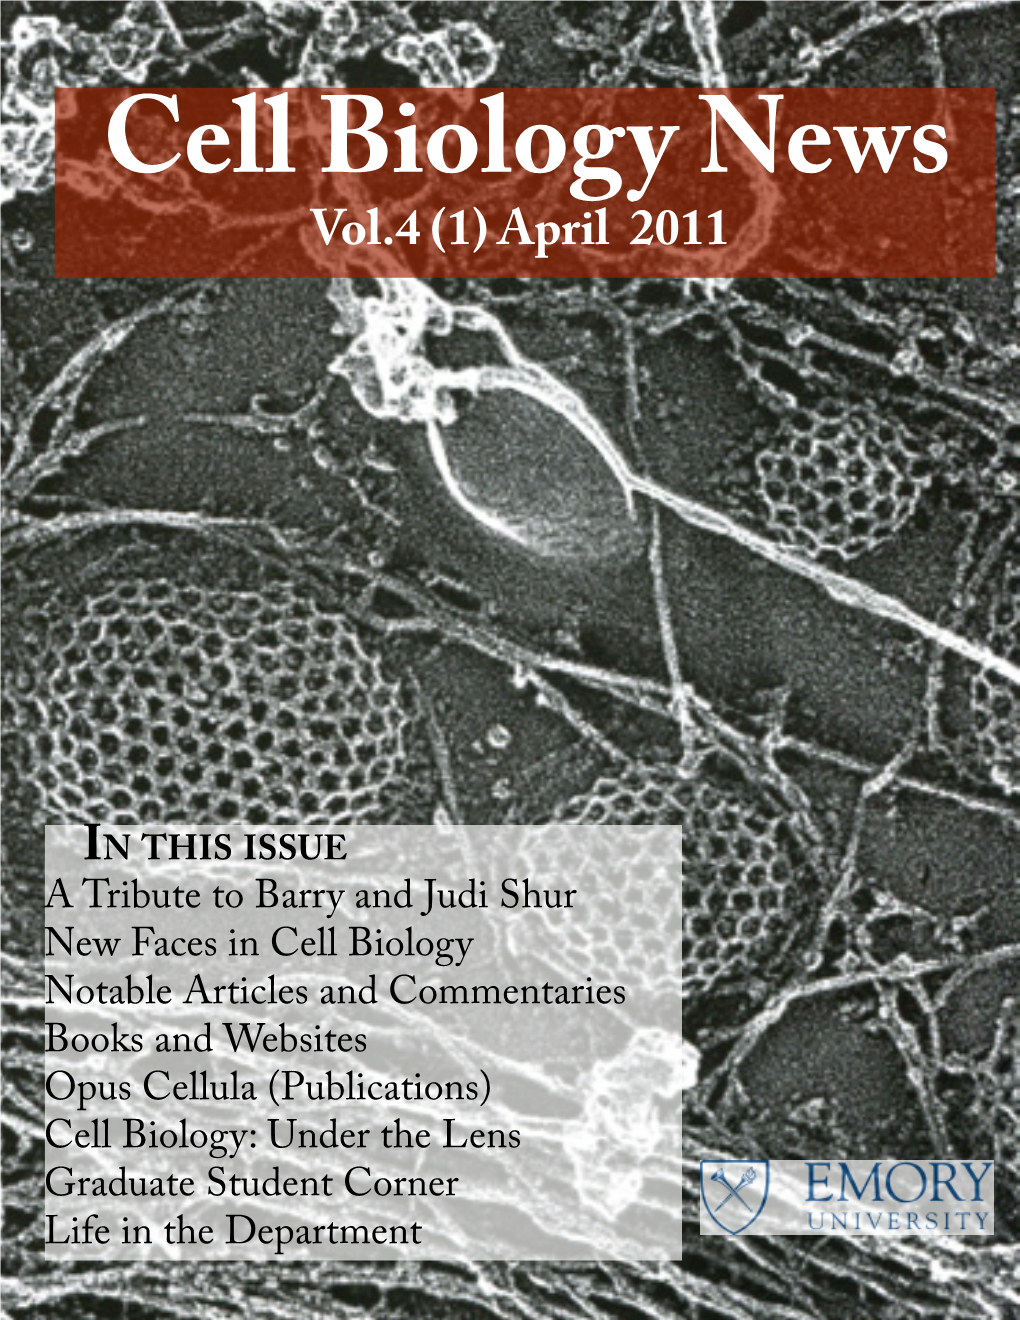 Cell Biology News Vol.4 (1) April 2011